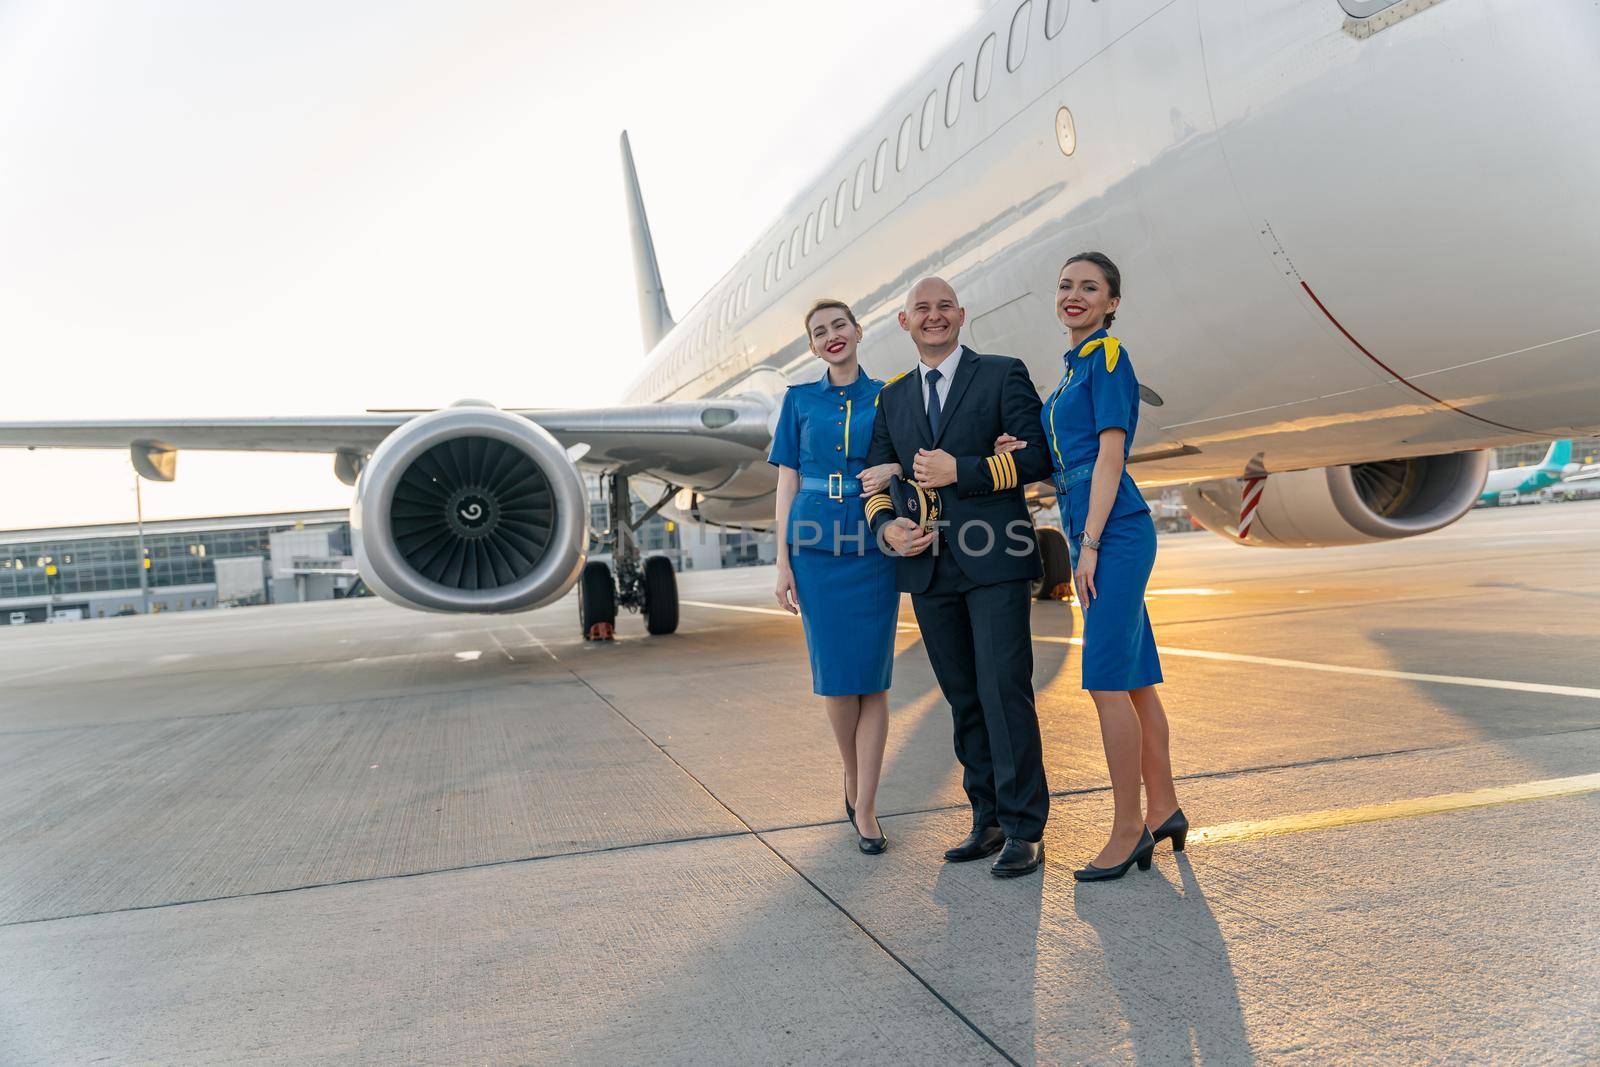 Happy pilot and flight attendants standing near big plane together by Yaroslav_astakhov